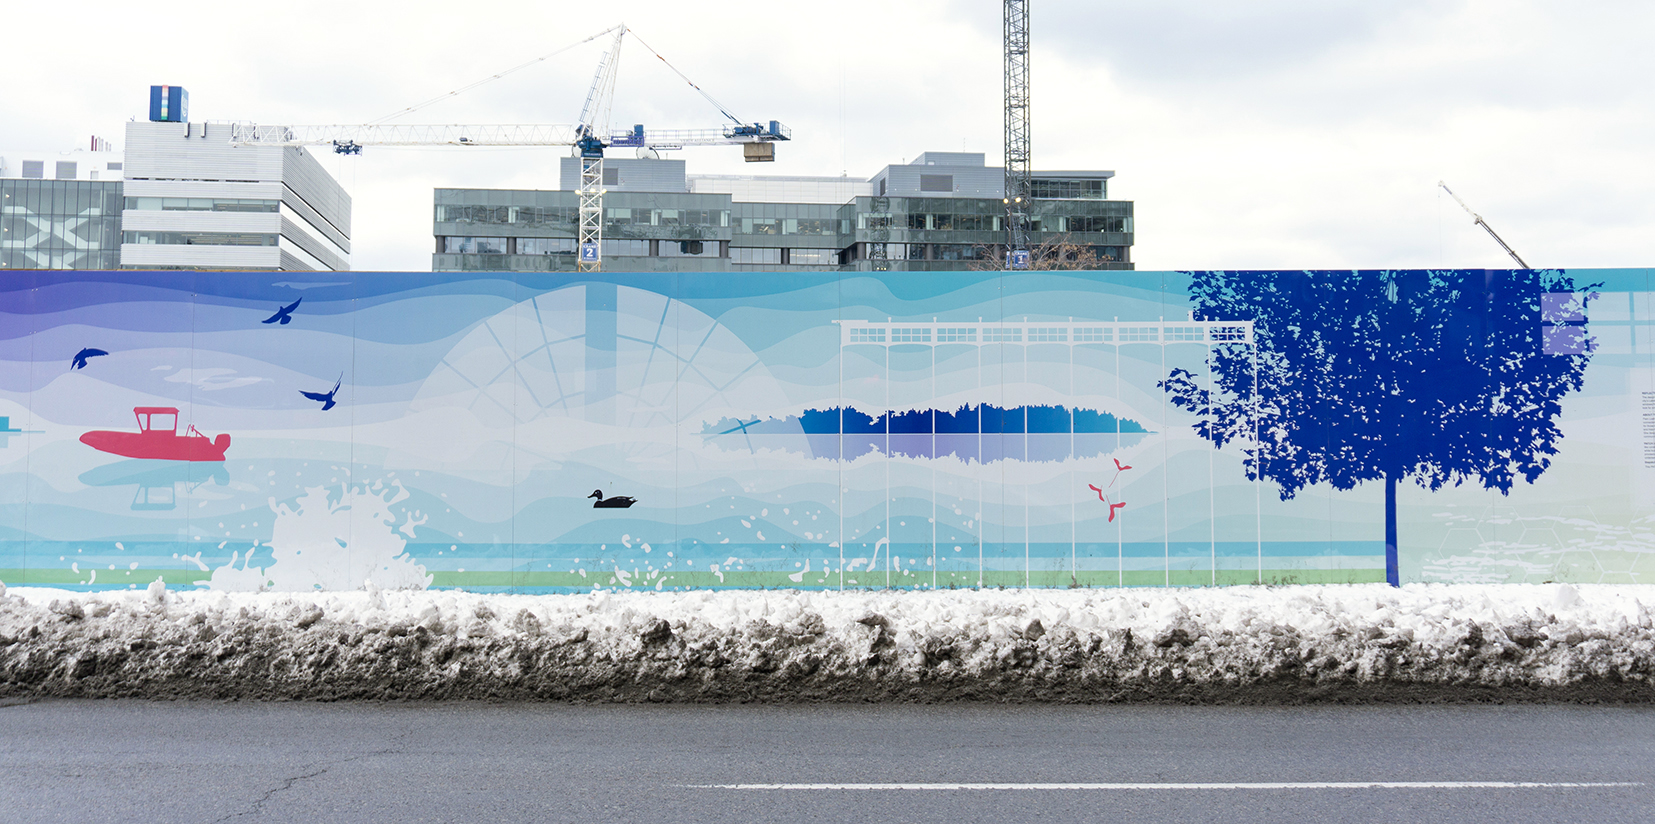 “Reflections” Lakeside Residences Construction Hoarding Mural